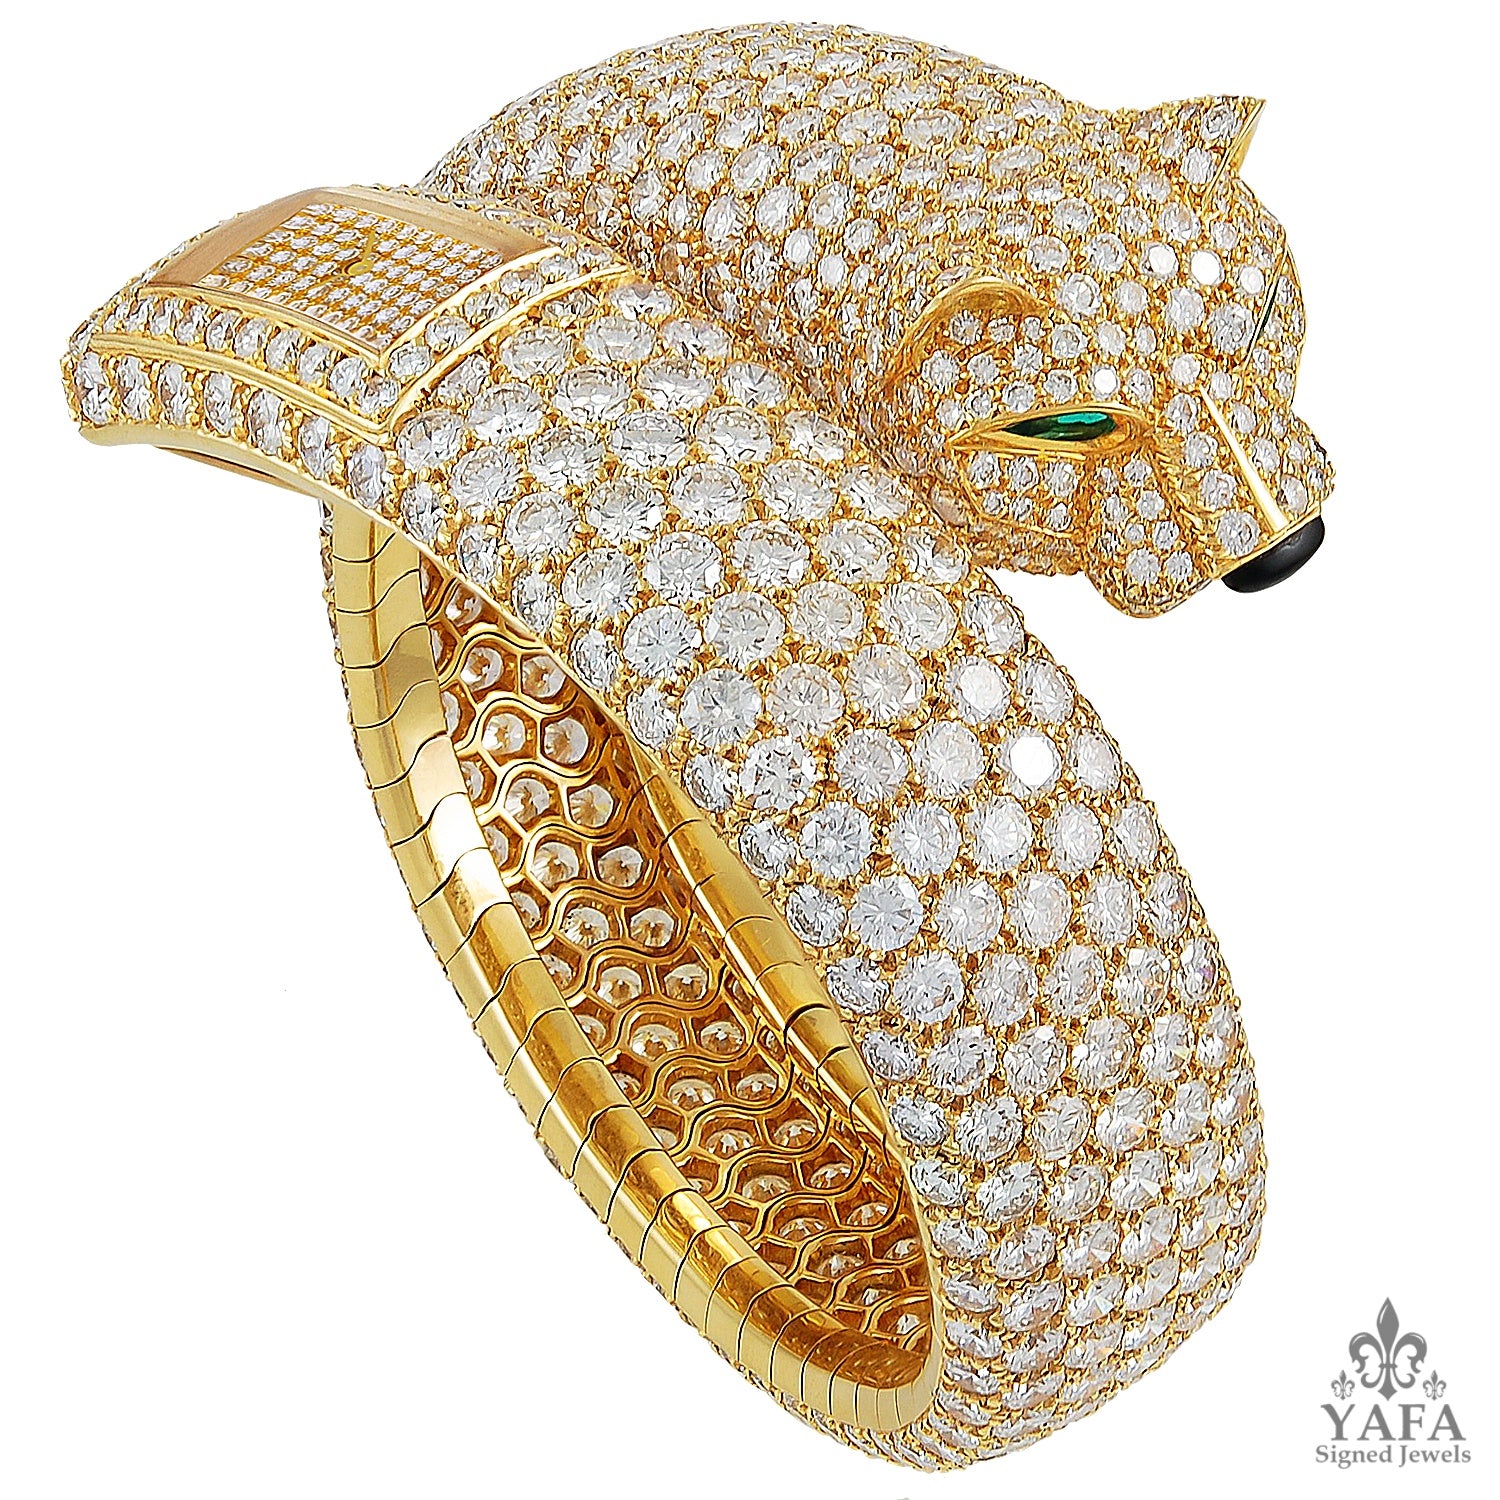 Wallis Simpson panther bracelet sells for £4.5m - Mirror Online